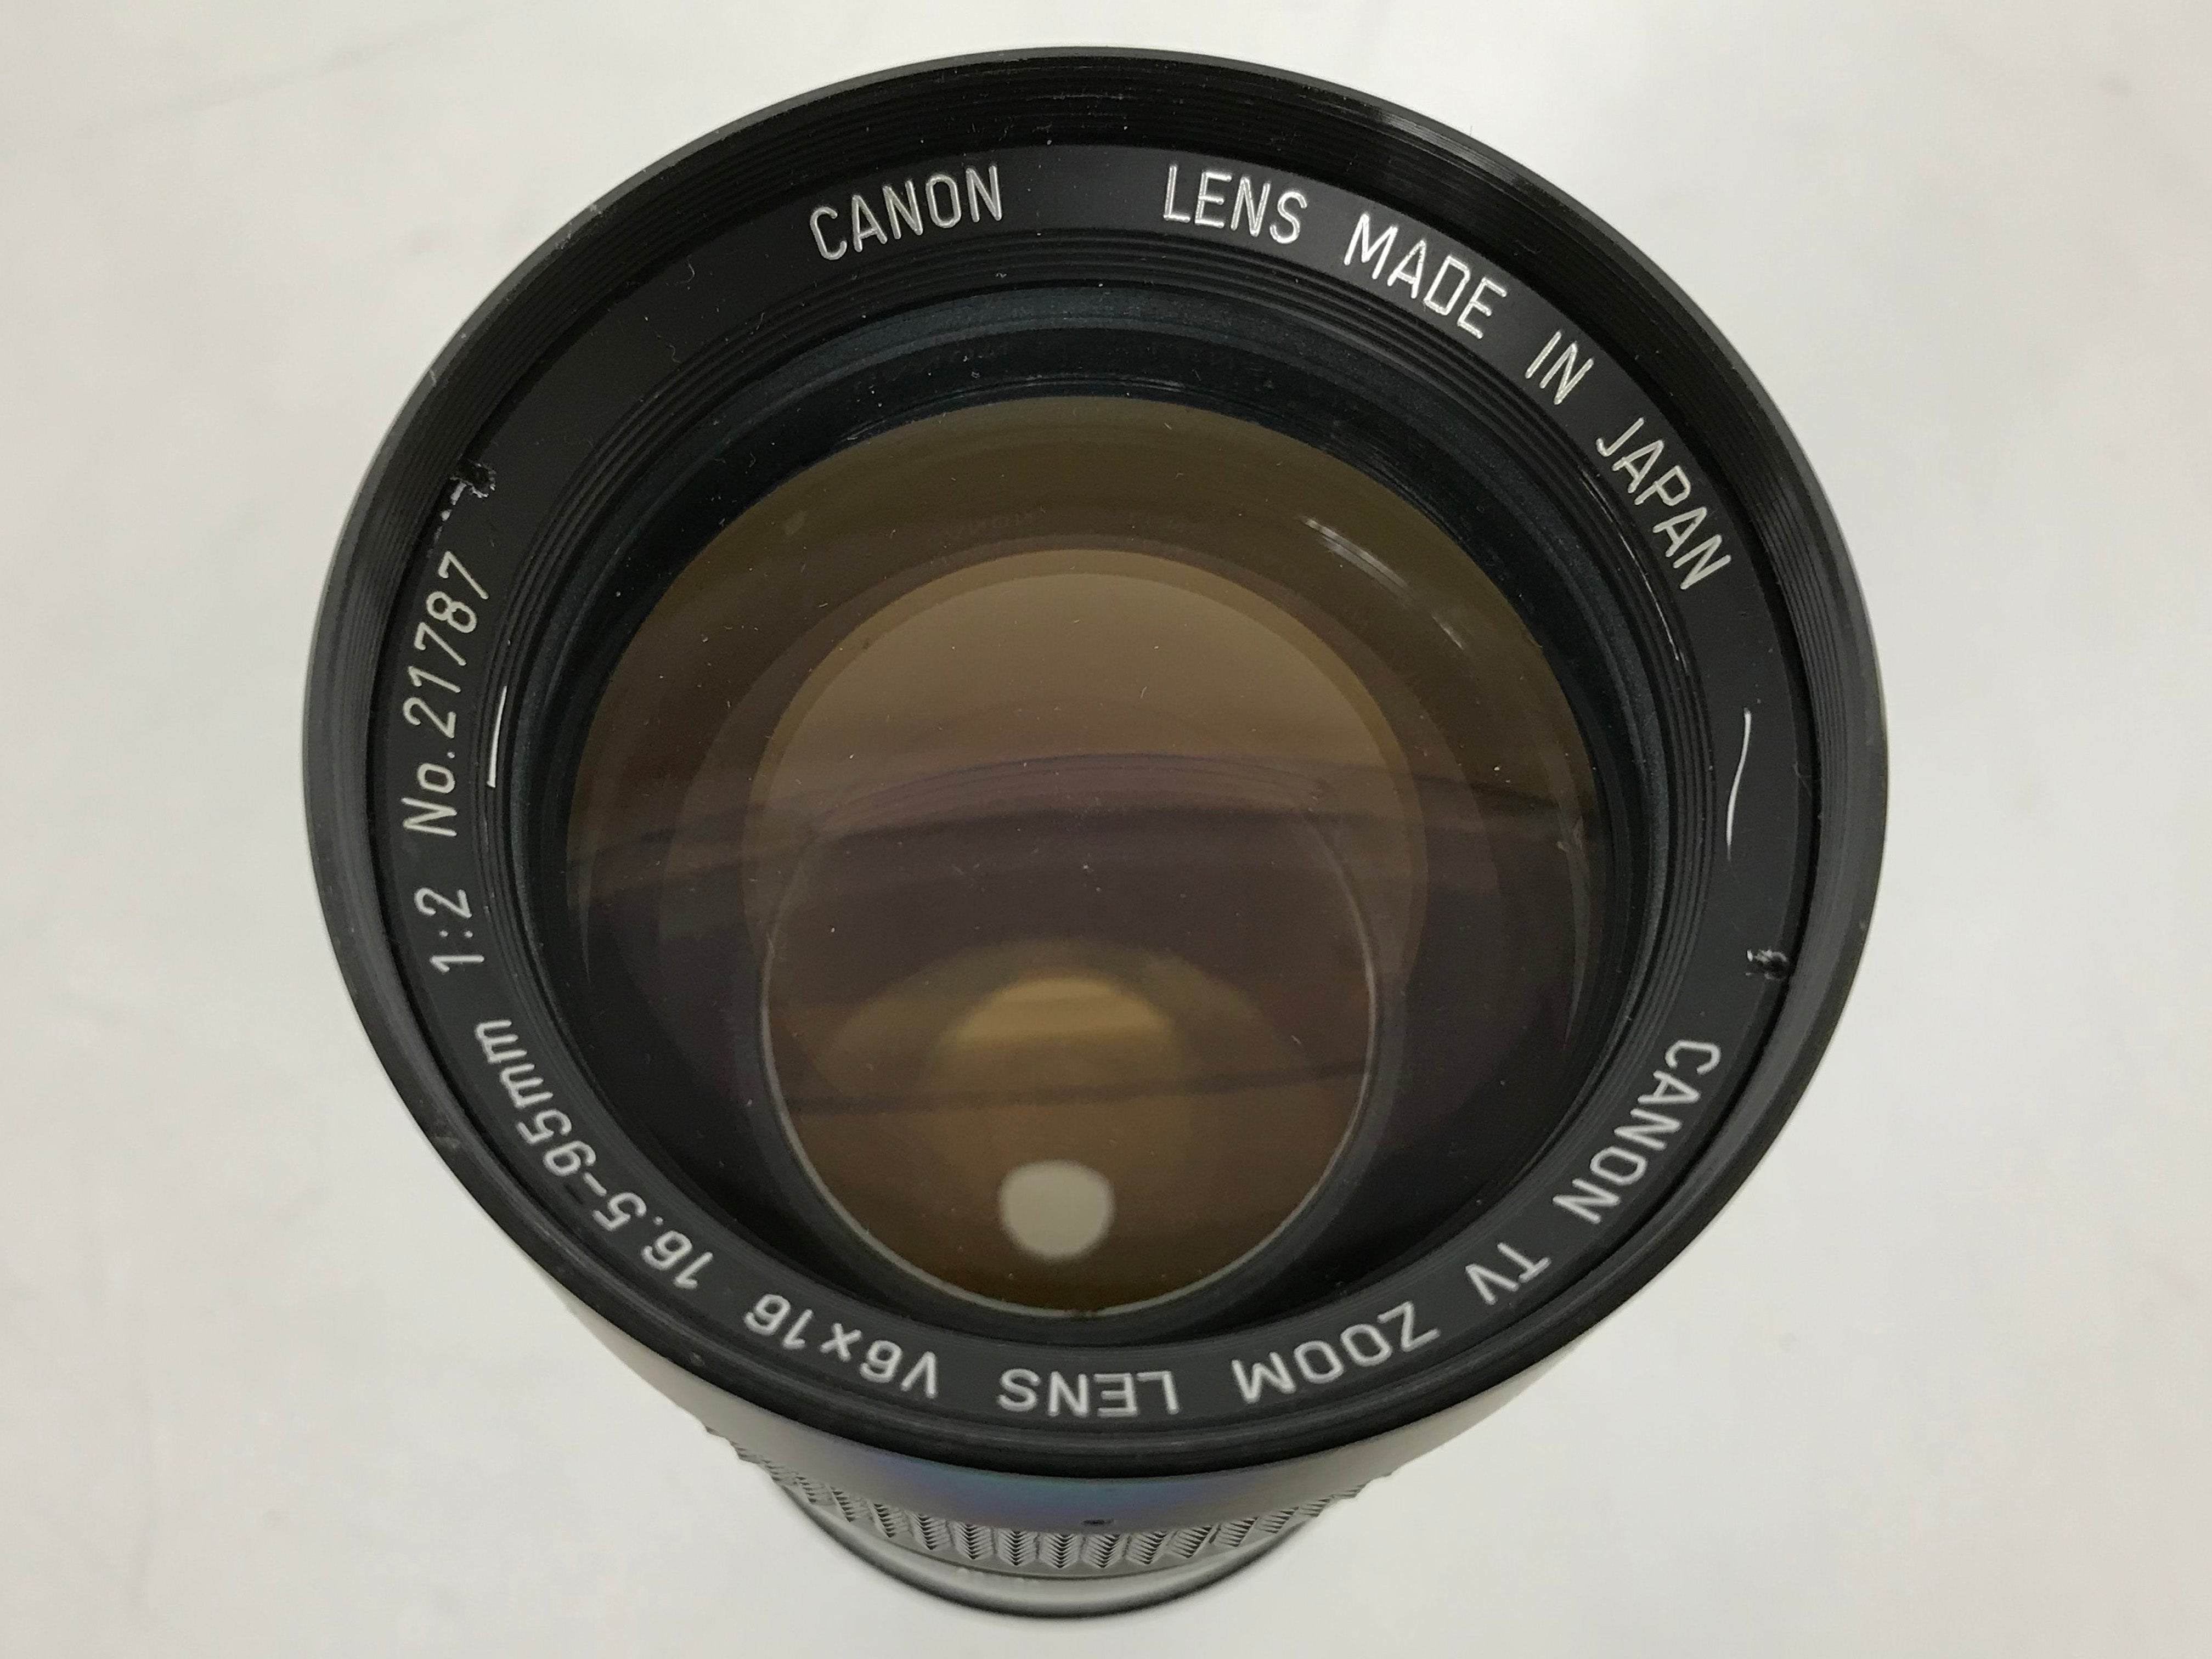 Canon TV Zoom Lens V6x16 16.5-95mm 1:2 No. 21787